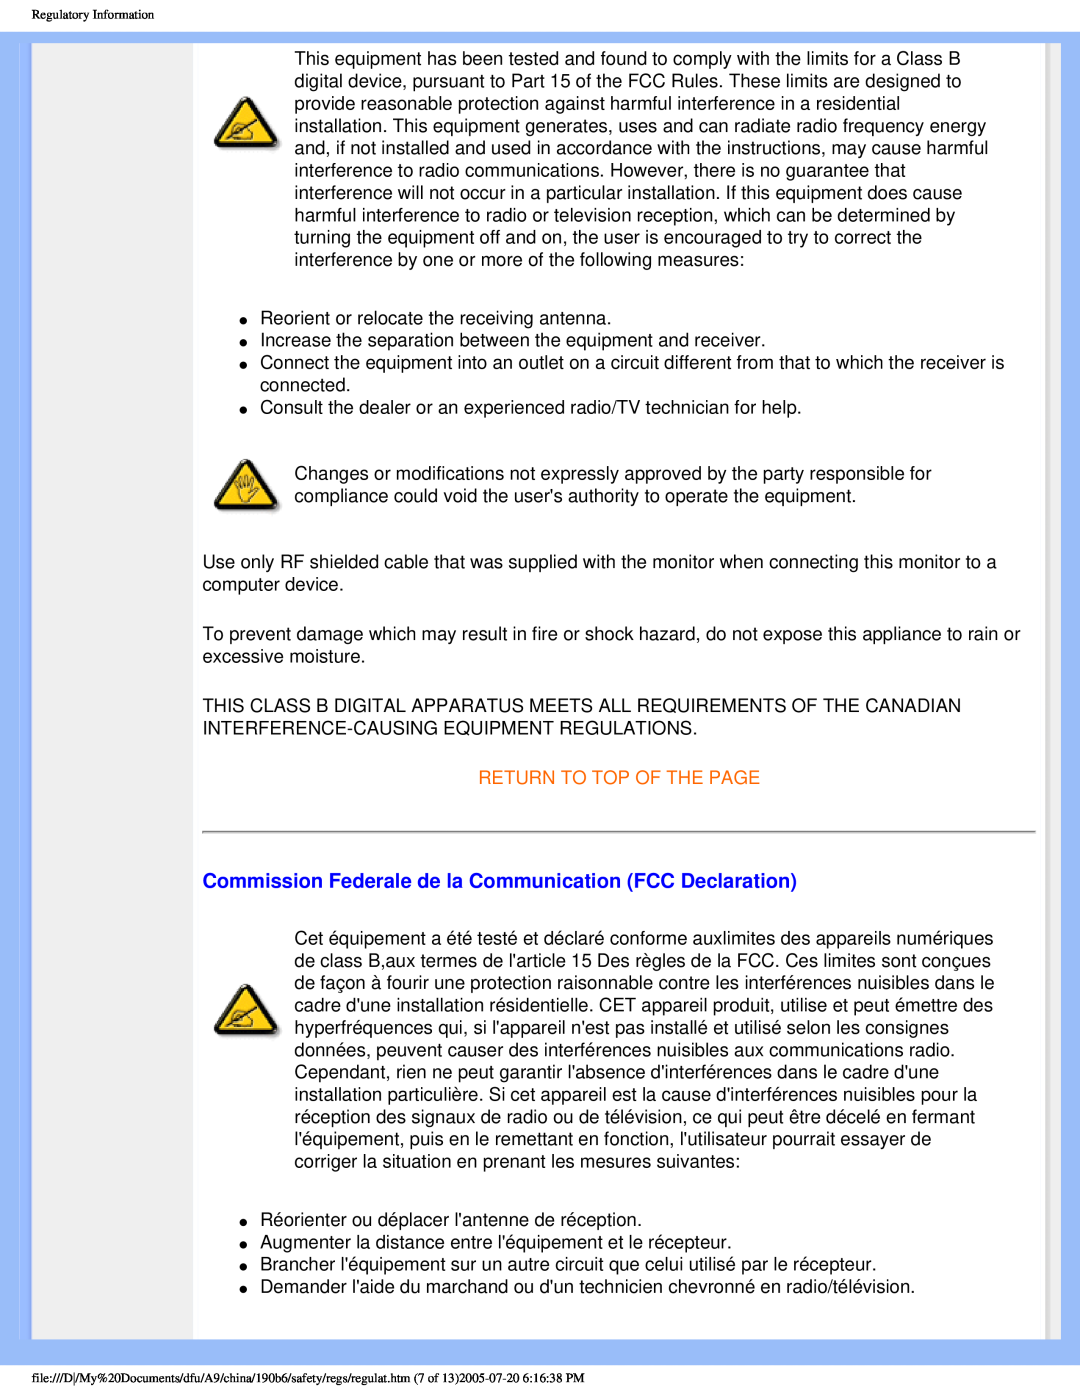 Philips 190B6 user manual Commission Federale de la Communication FCC Declaration, Return To Top Of The Page 